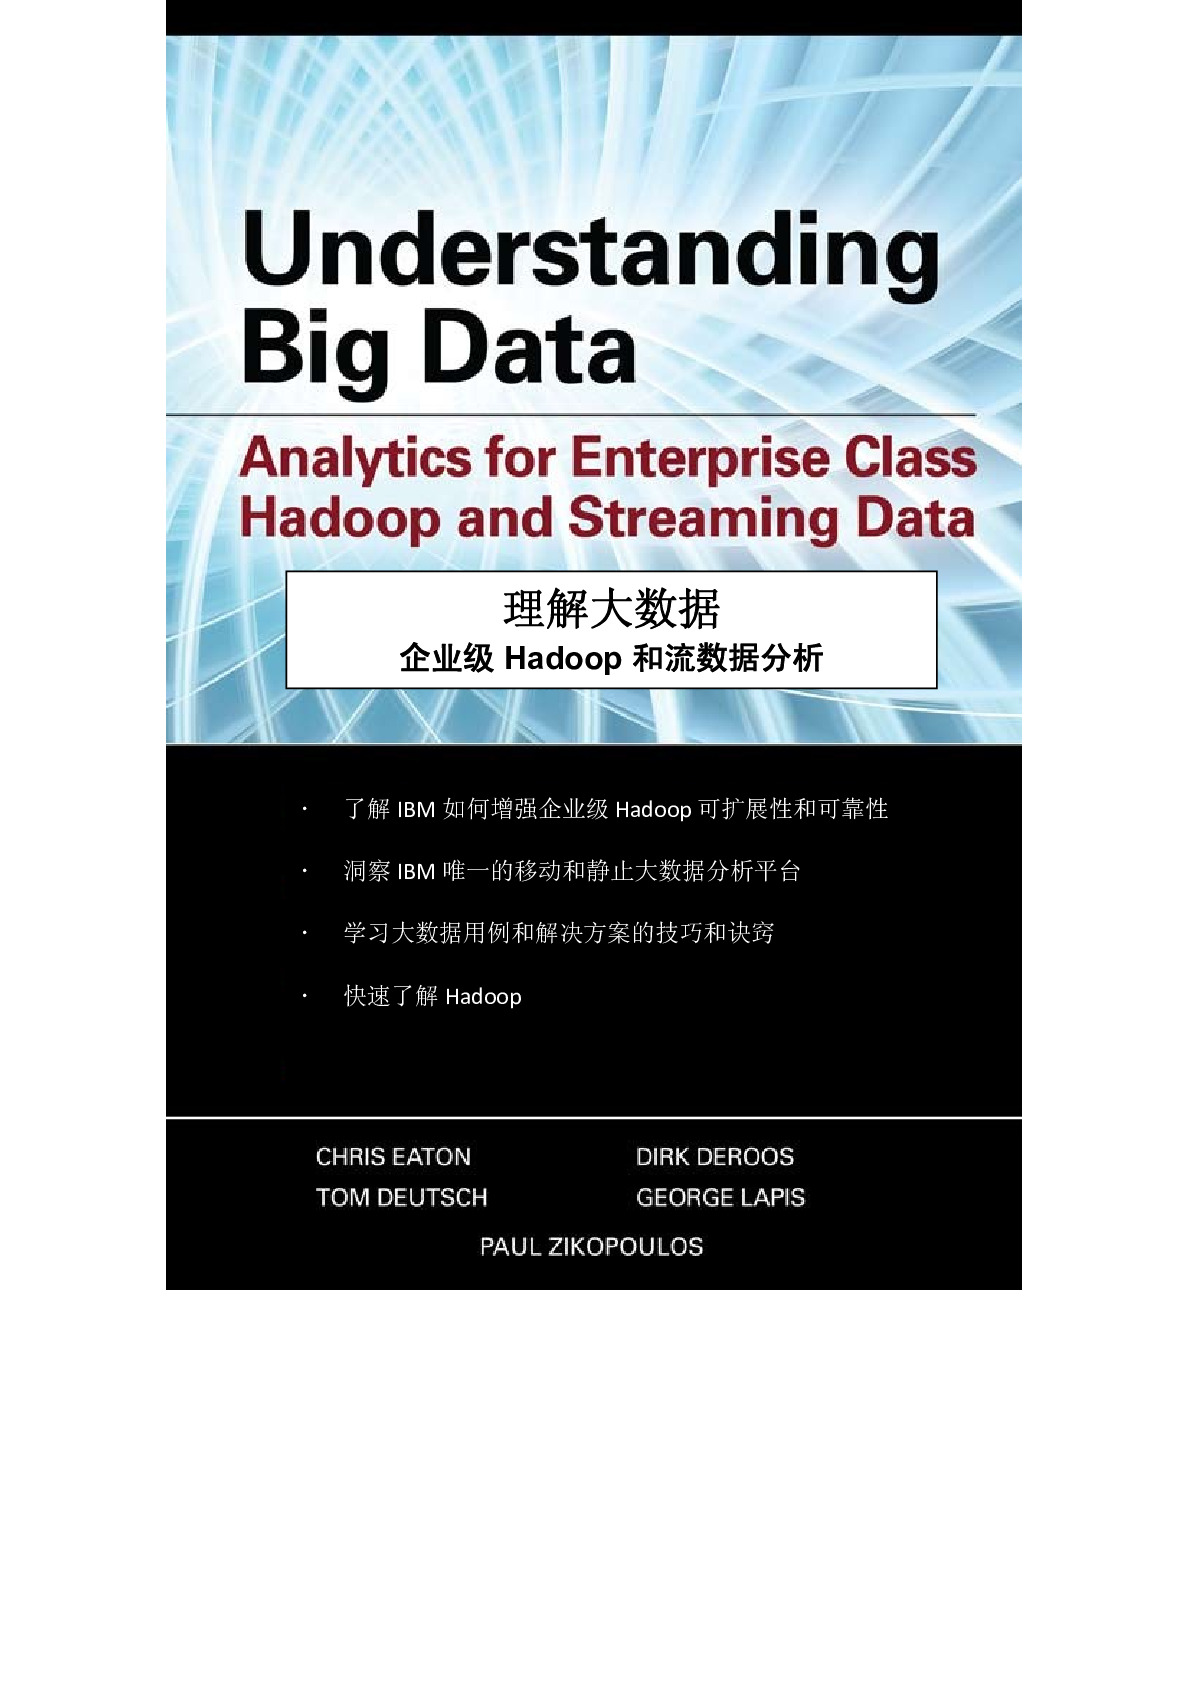 understanding-big-data-analytics-for-enterprise-class-hadoop-and-streaming-data-2012